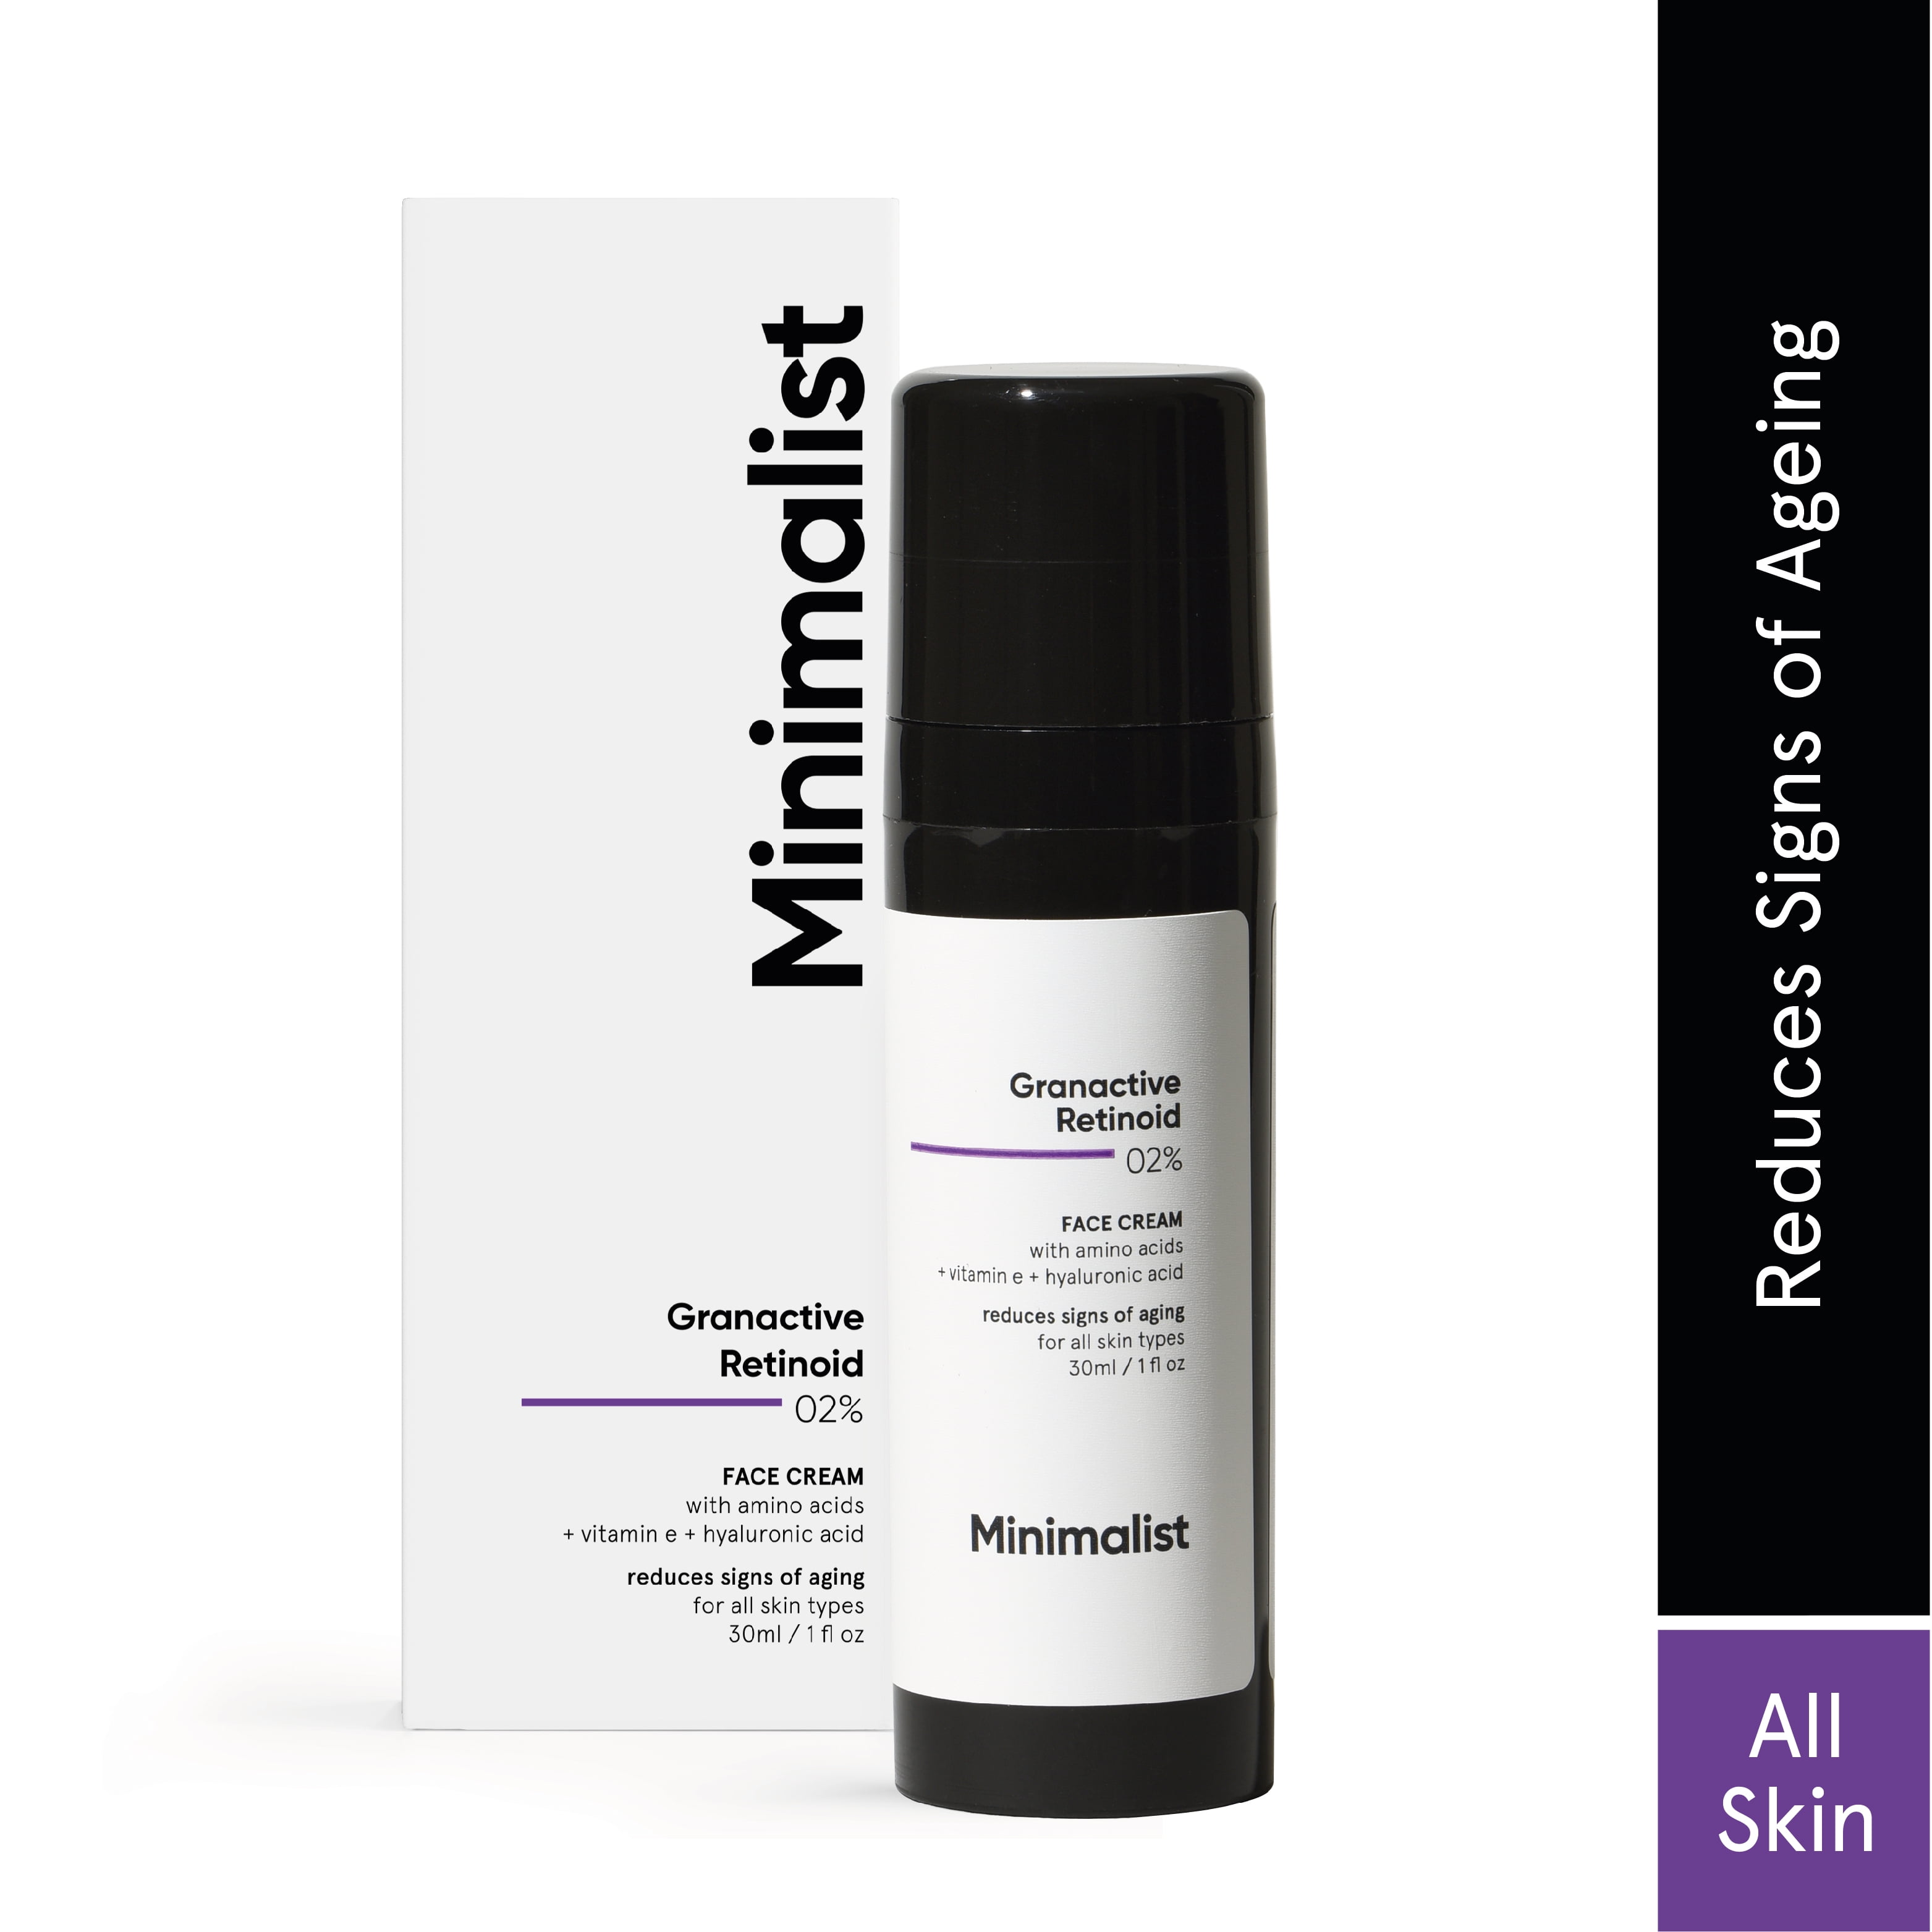 2% Retinoid Anti Ageing Cream for Wrinkles & Fine Lines | With Retinol Derivative For Sensitive Skin, ml Walmart.com